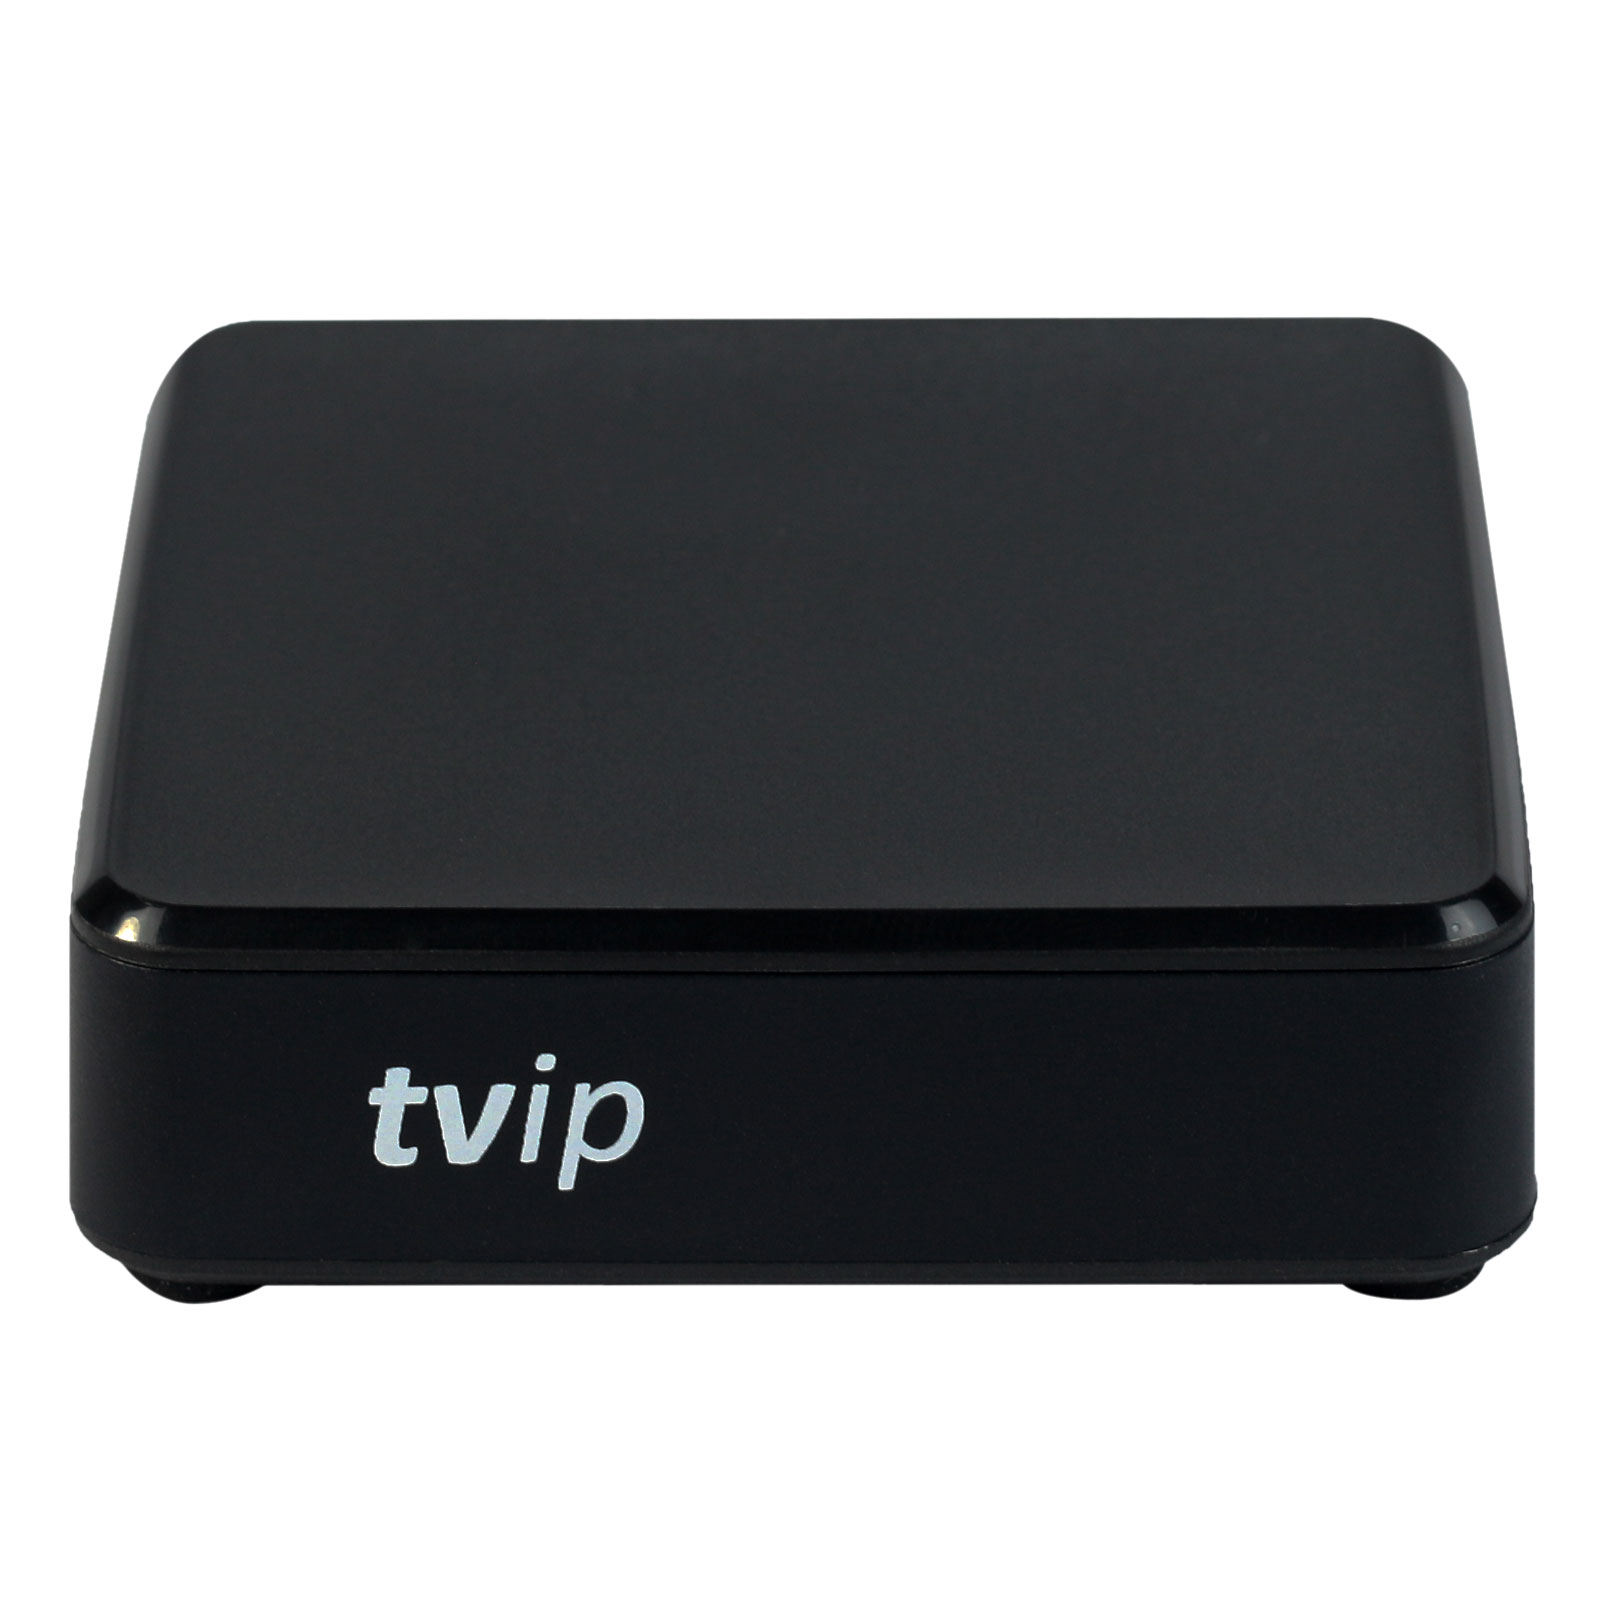 TVIP S-Box v.610 Internet TV 4K Ultra HD HEVC UHD Android 8.0 Linux Multimedia IP Box